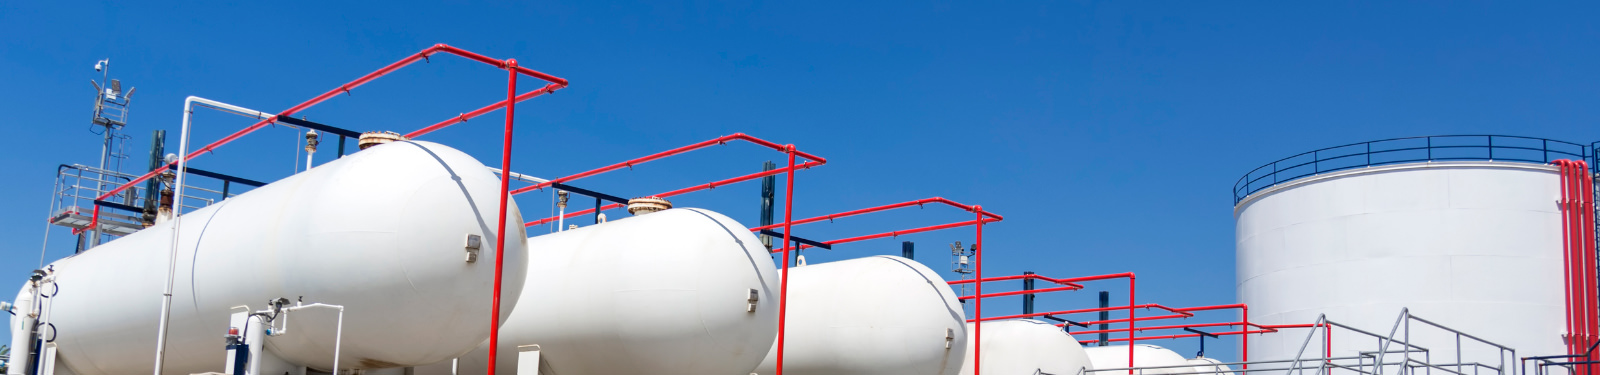 Storage & Distribution - Industrial Gas